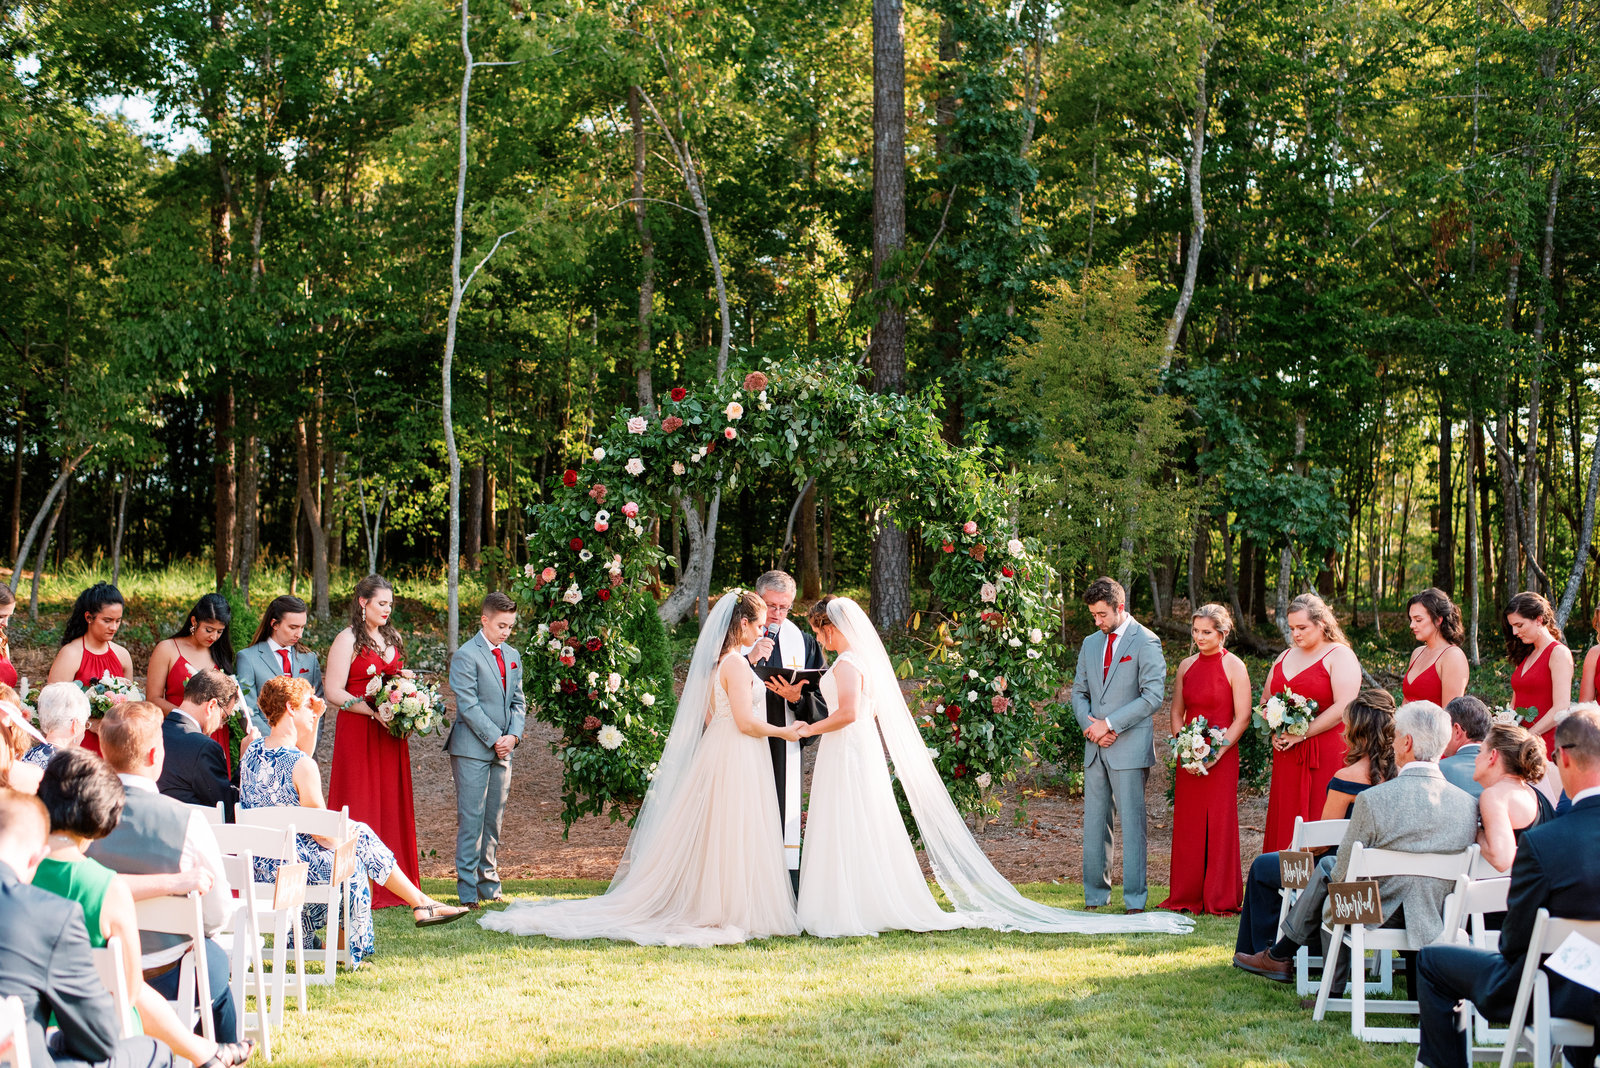 LGBTQ friendly wedding photographer North Carolina